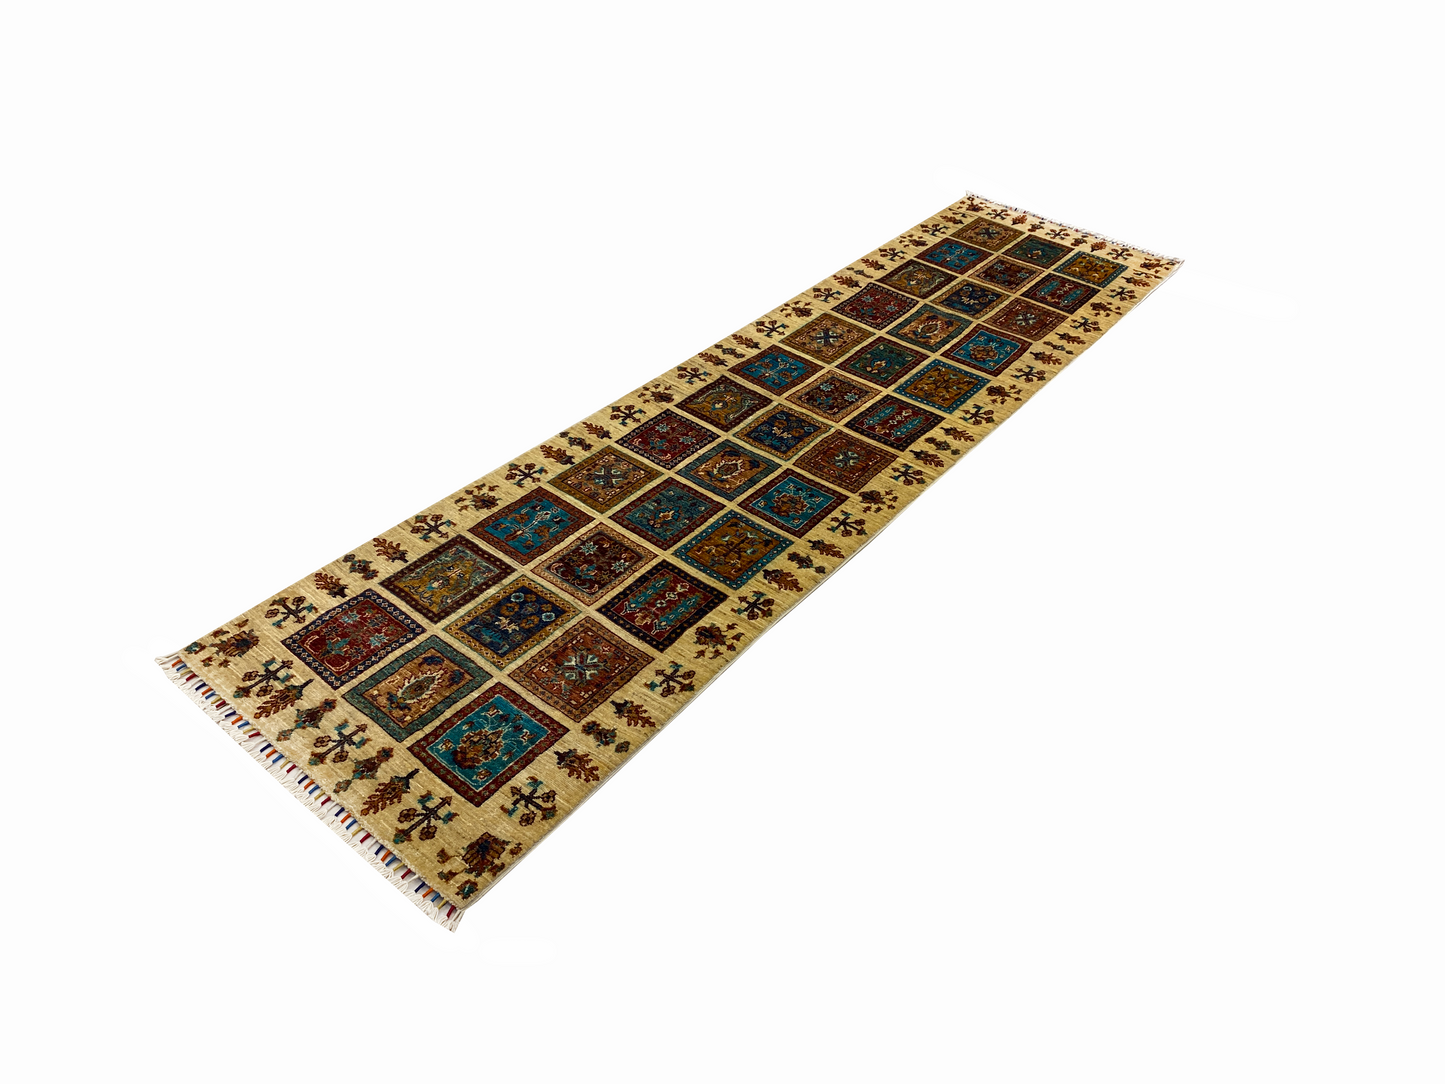 Şirvan Bicolor Carpet 298 x 79 cm